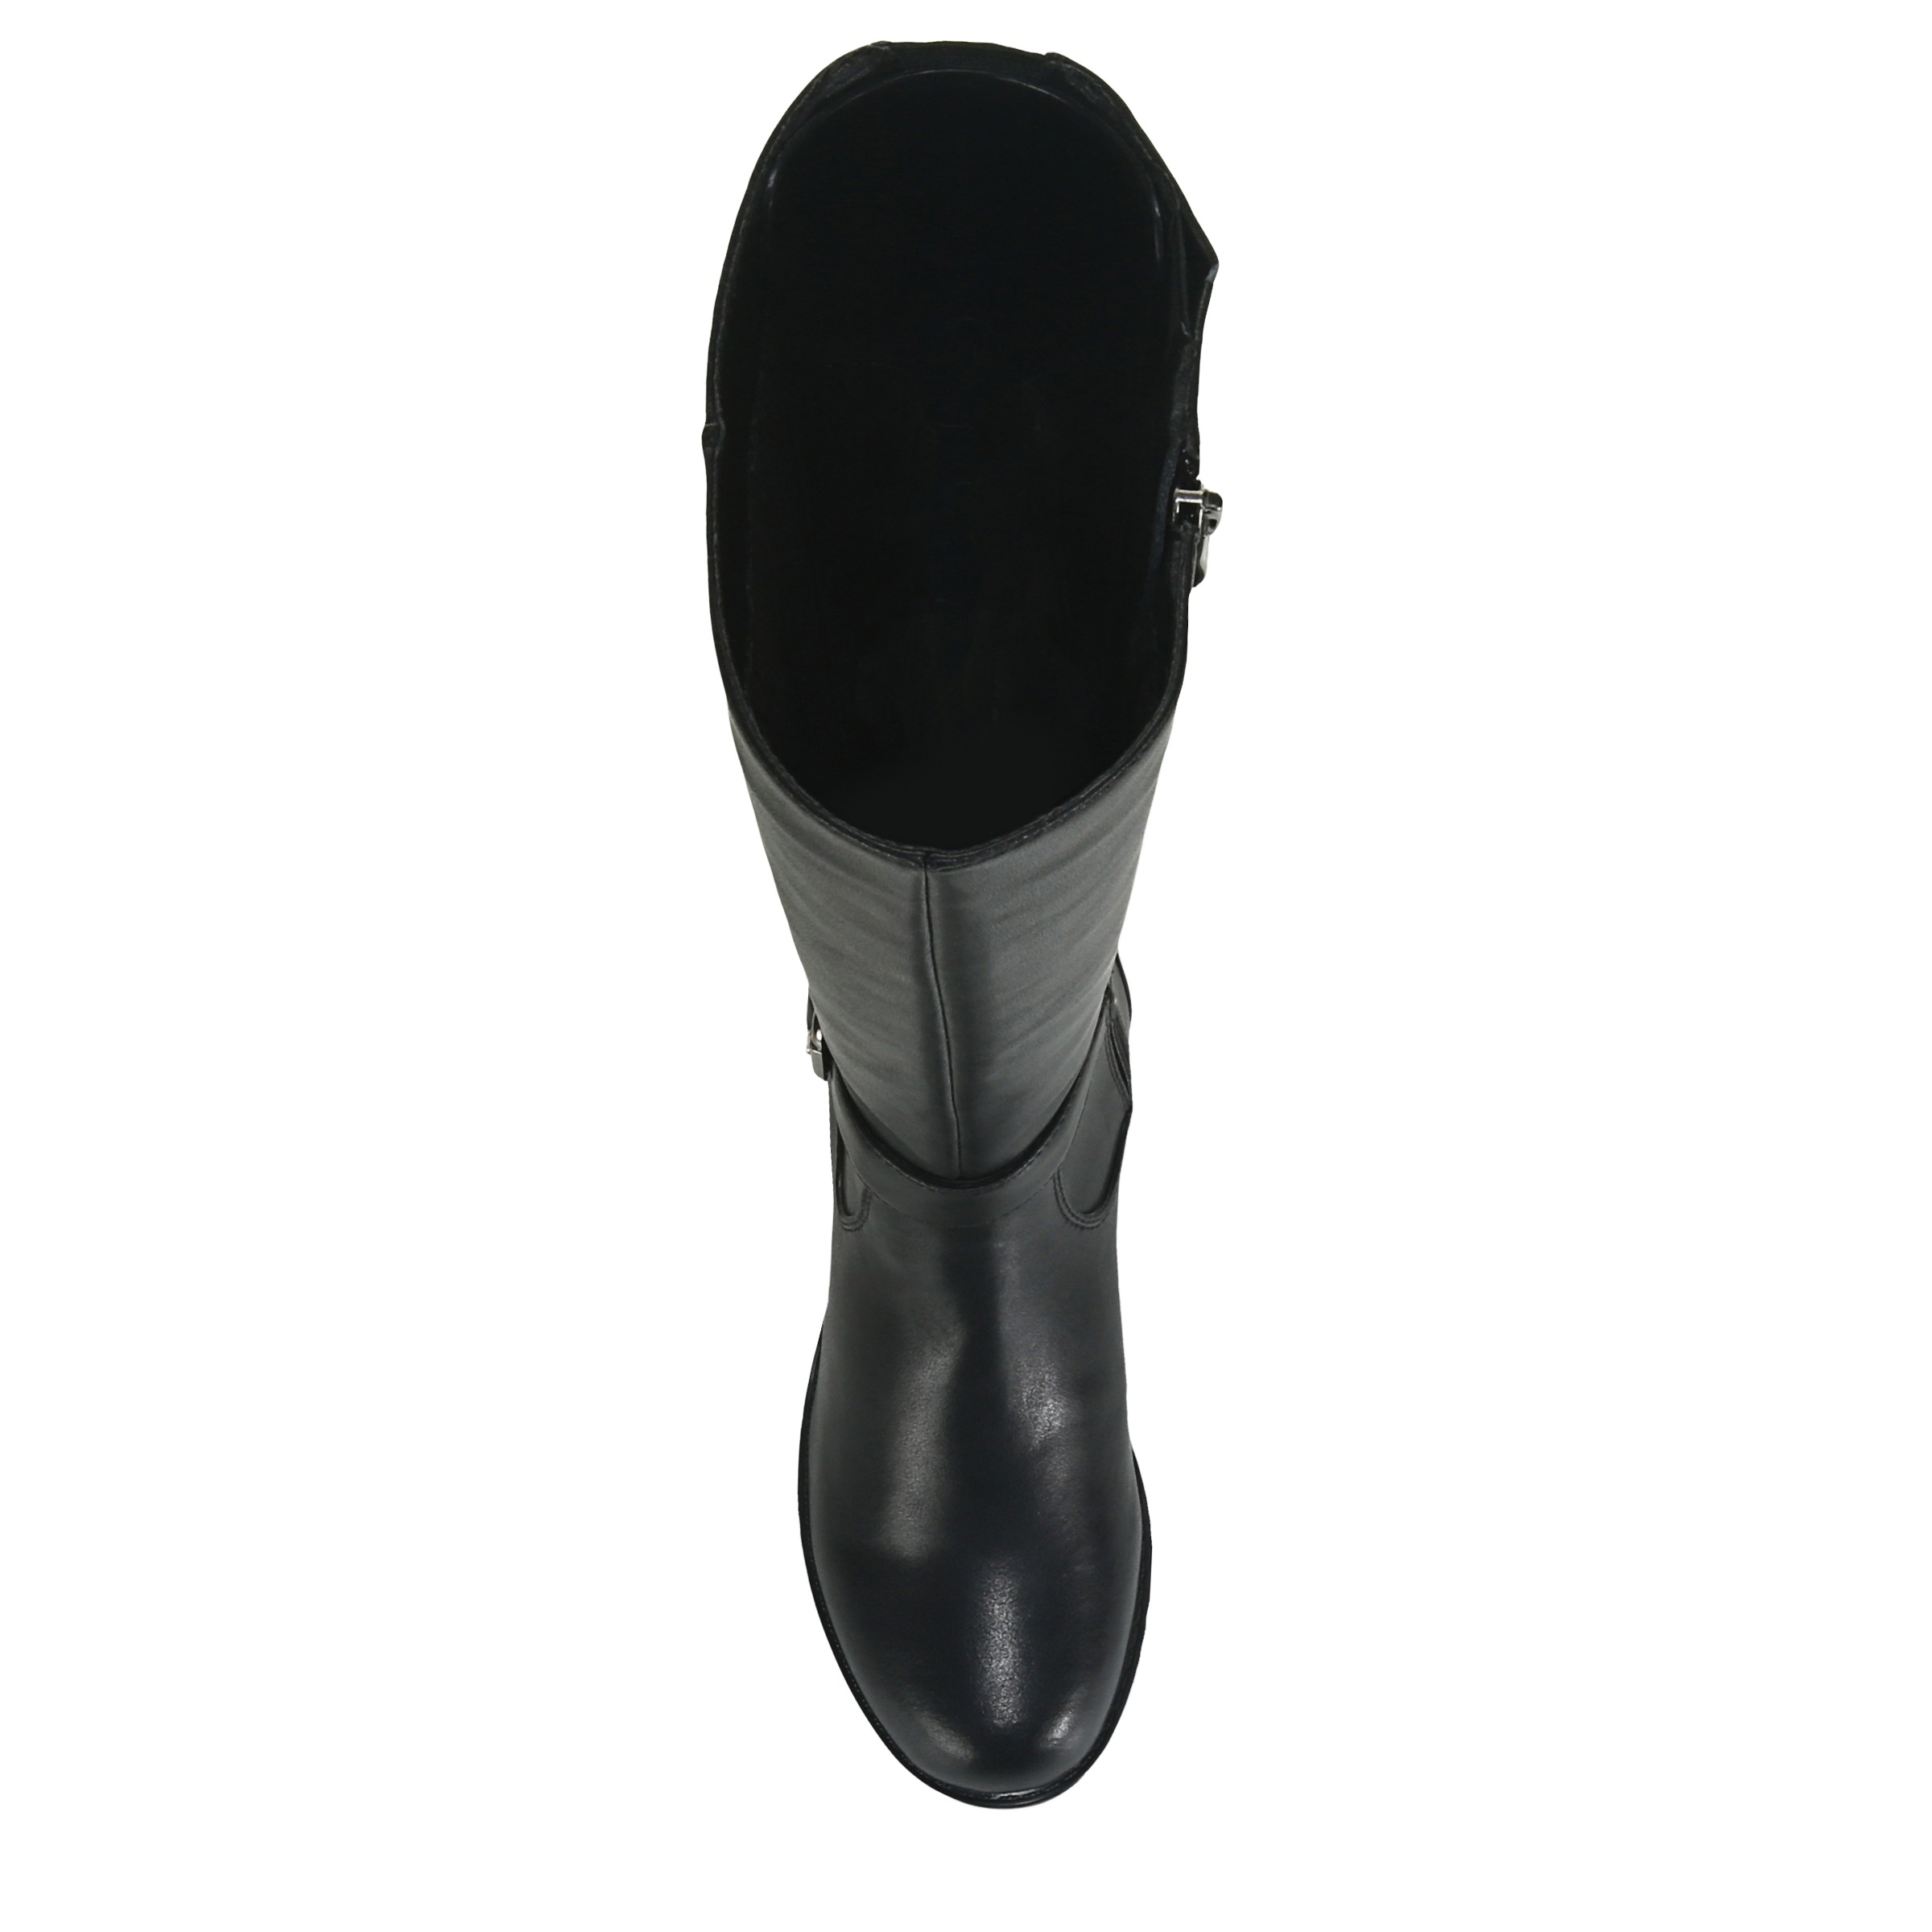 Women's Tessa Waterproof Leather Tall Shaft Boot